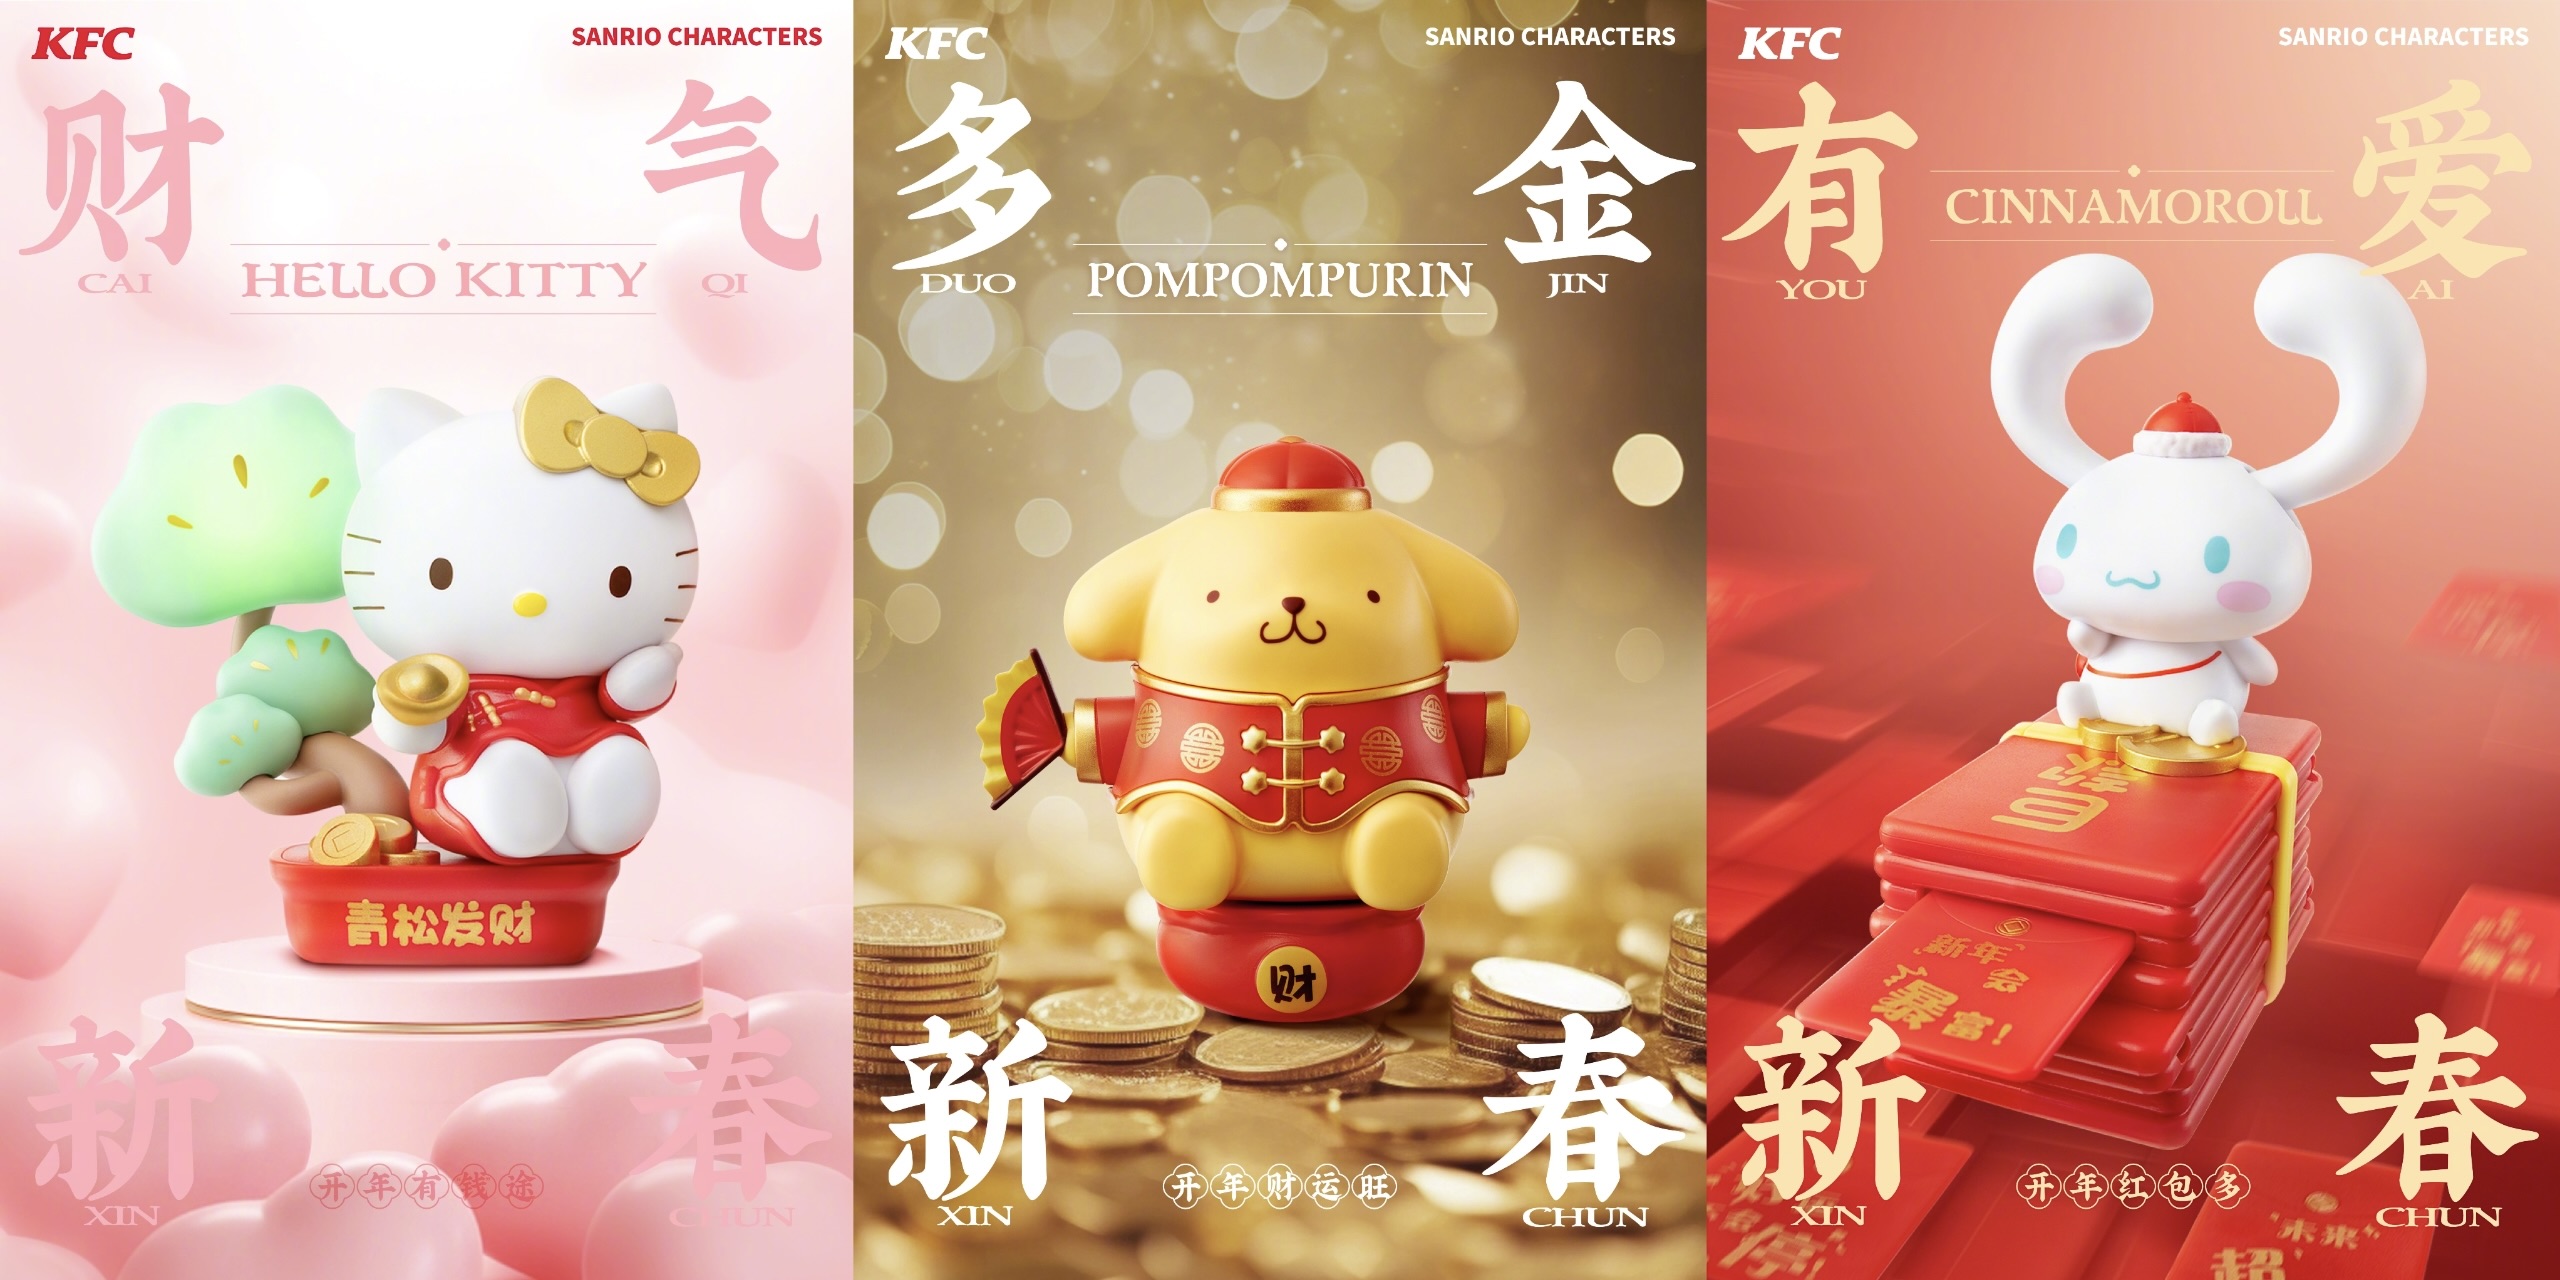 KFC celebrates CNY with Sanrio collaboration